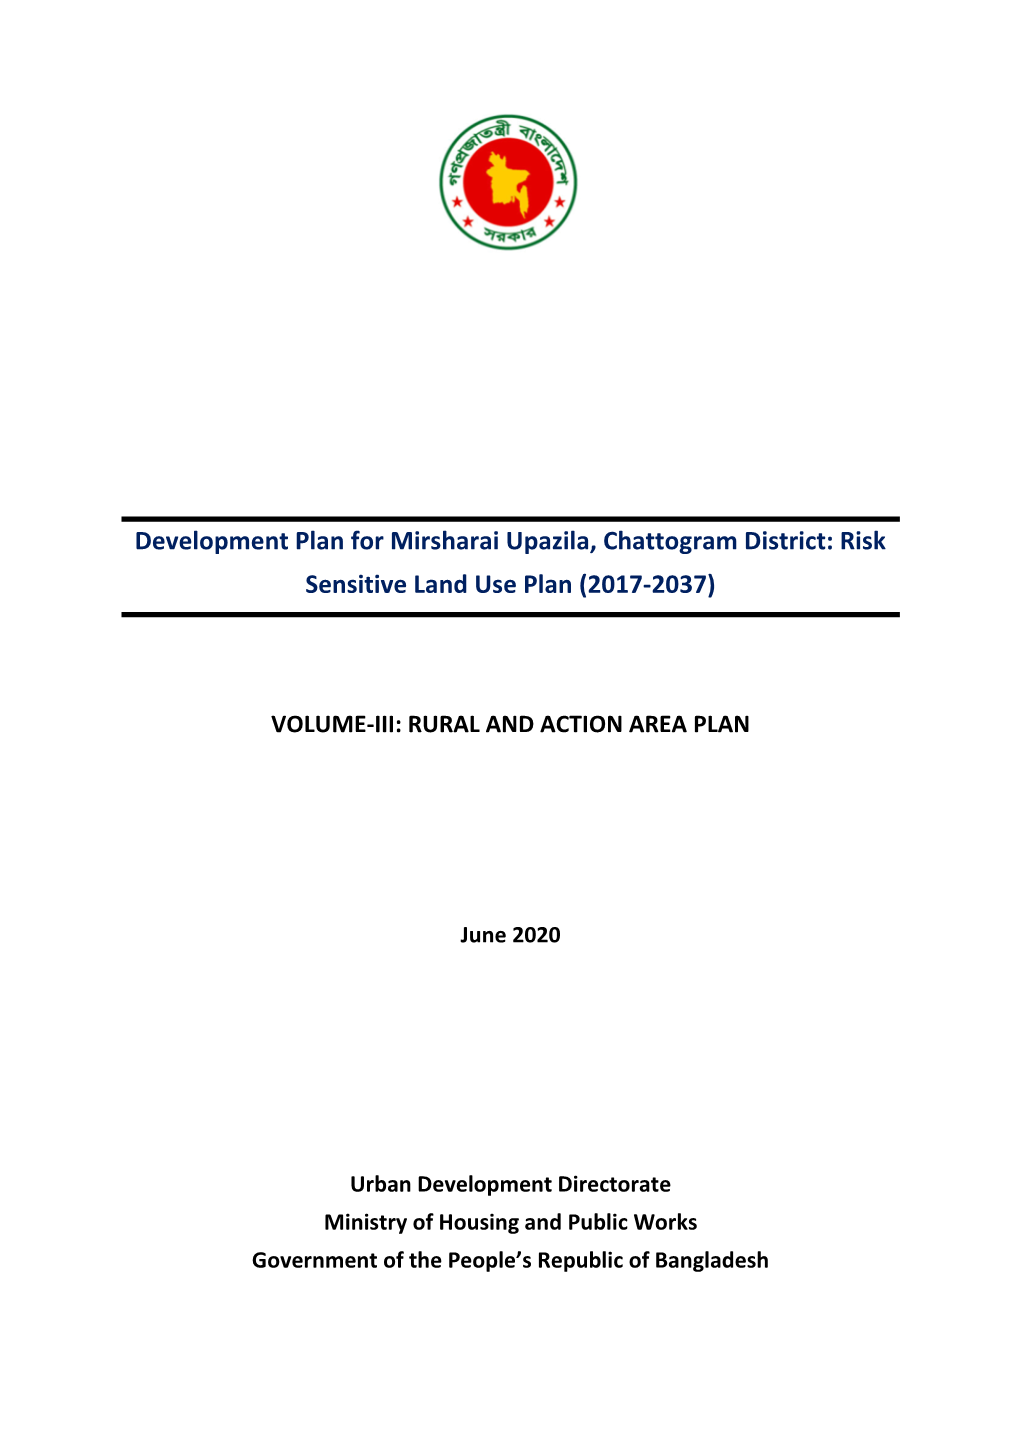 Development Plan for Mirsharai Upazila, Chattogram District: Risk Sensitive Land Use Plan (2017-2037)